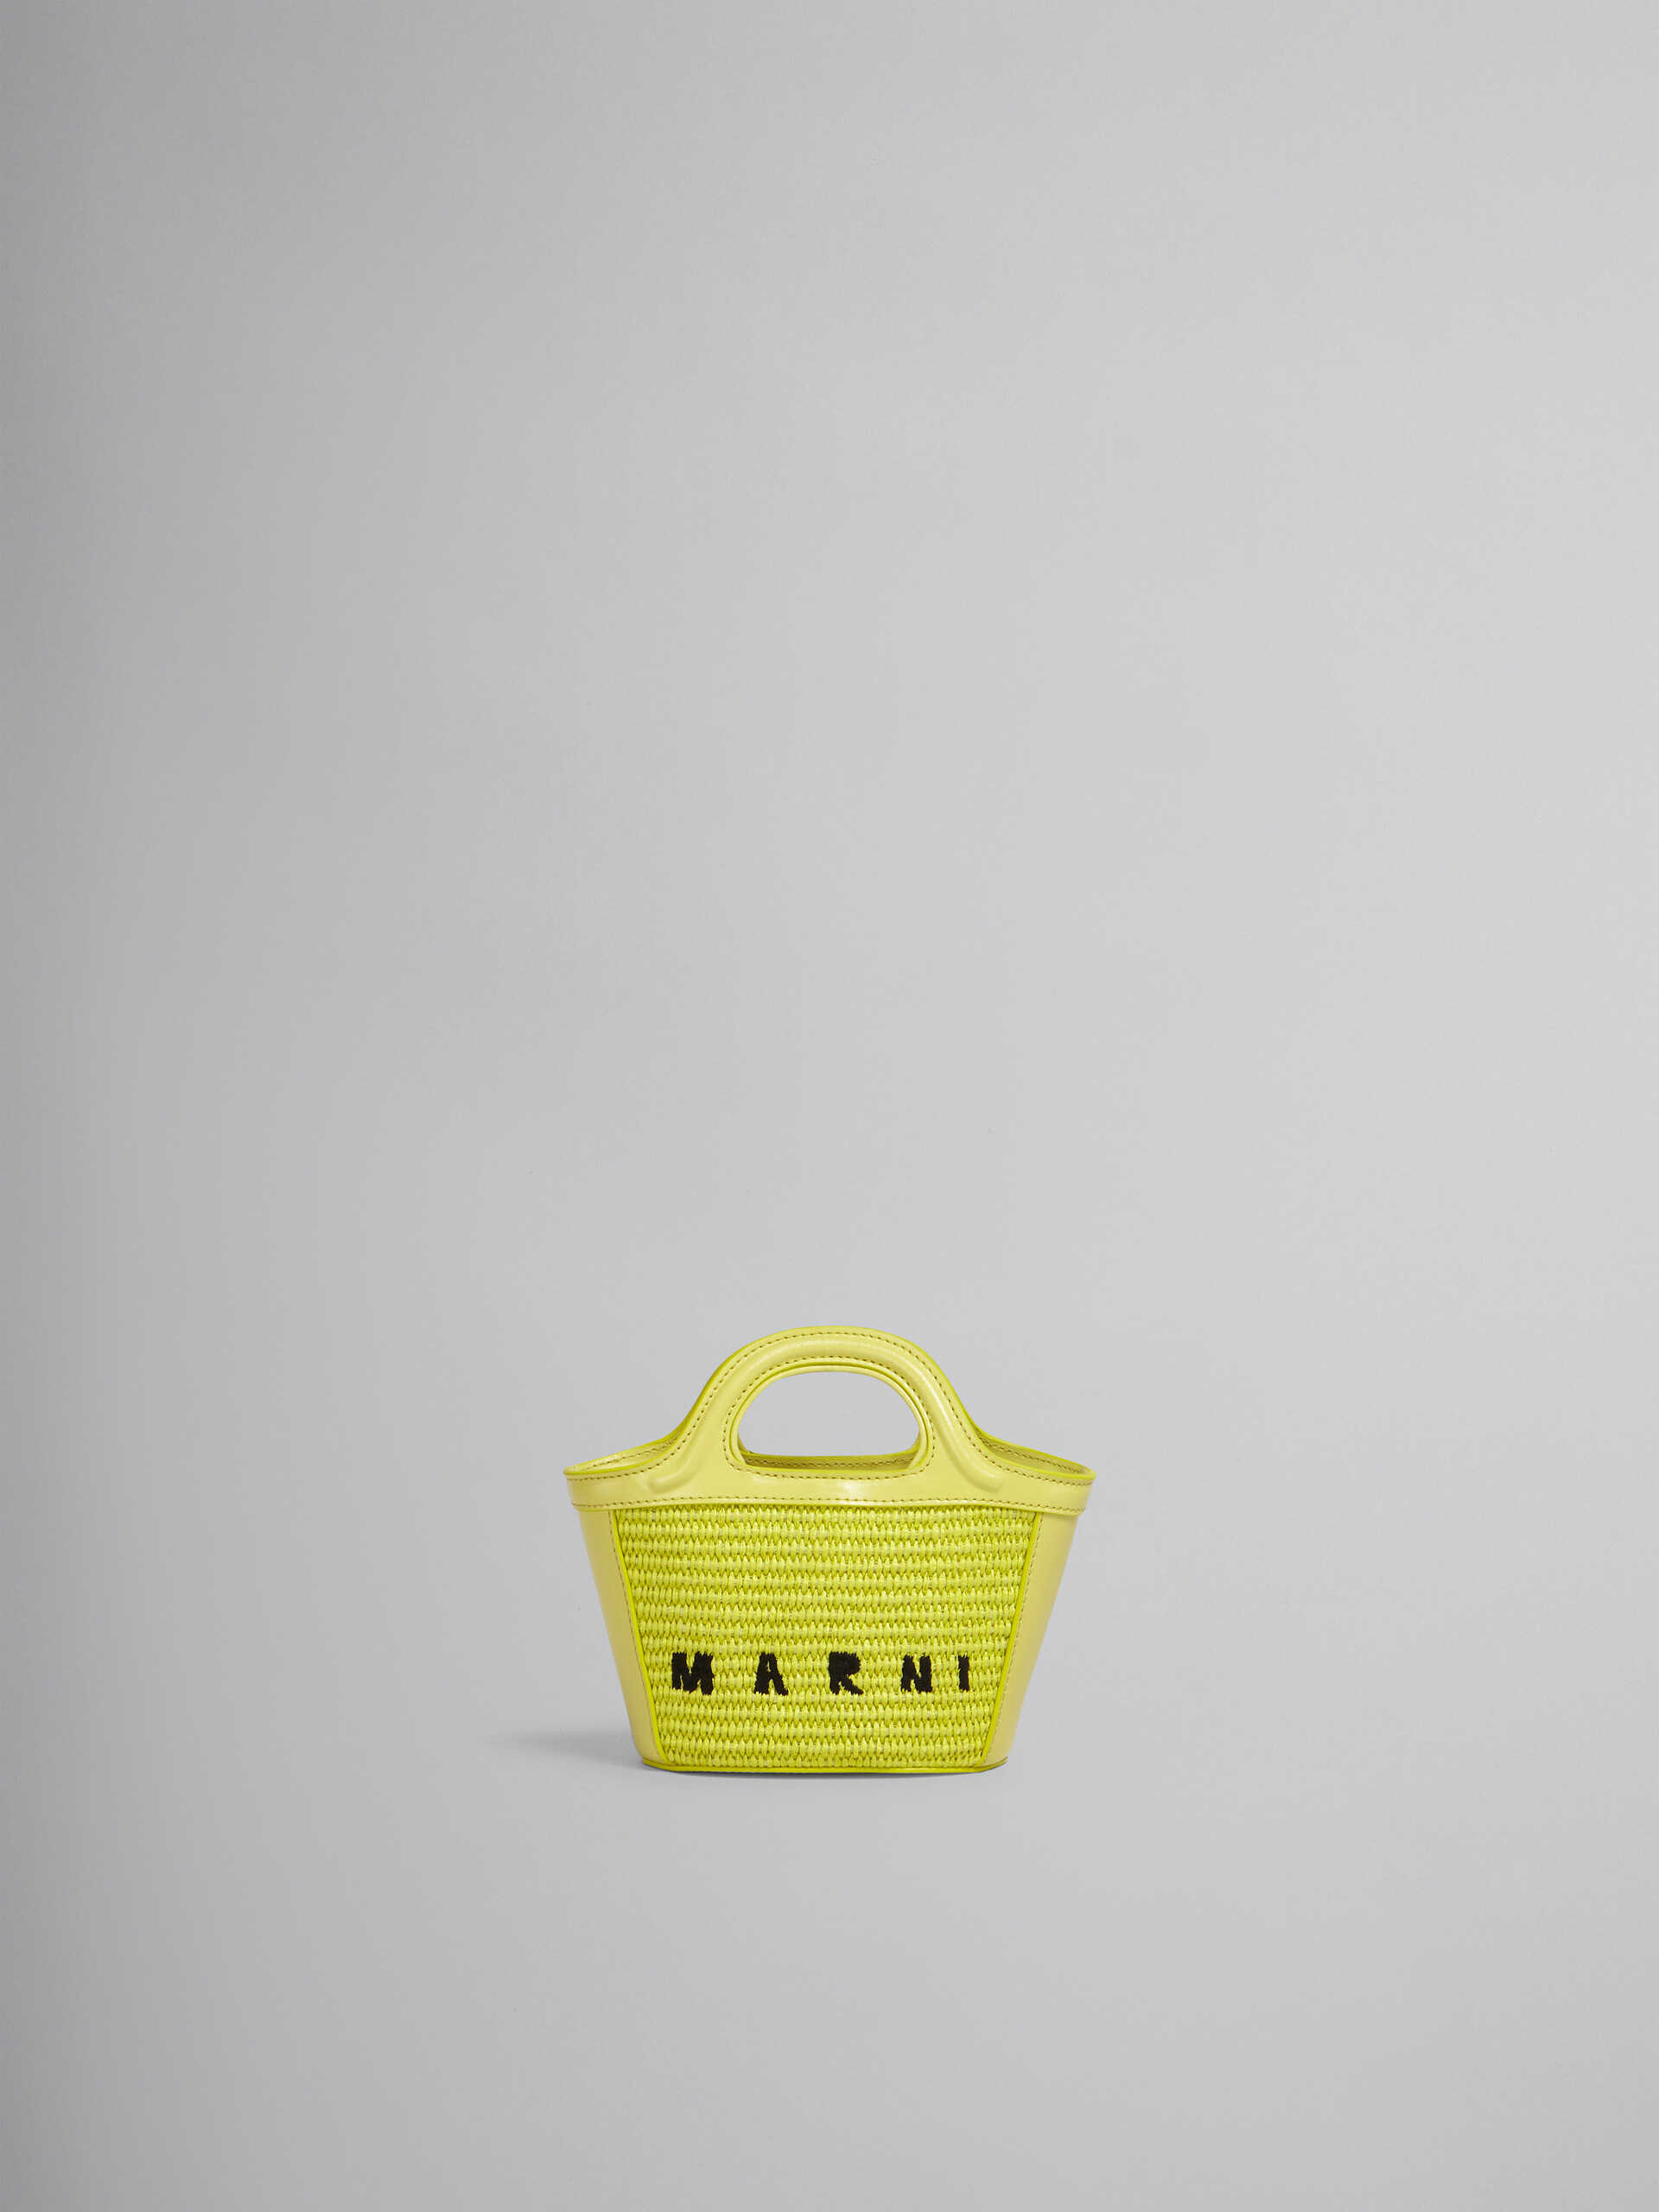 TROPICALIA micro bag in yellow leather and raffia - Handbag - Image 1